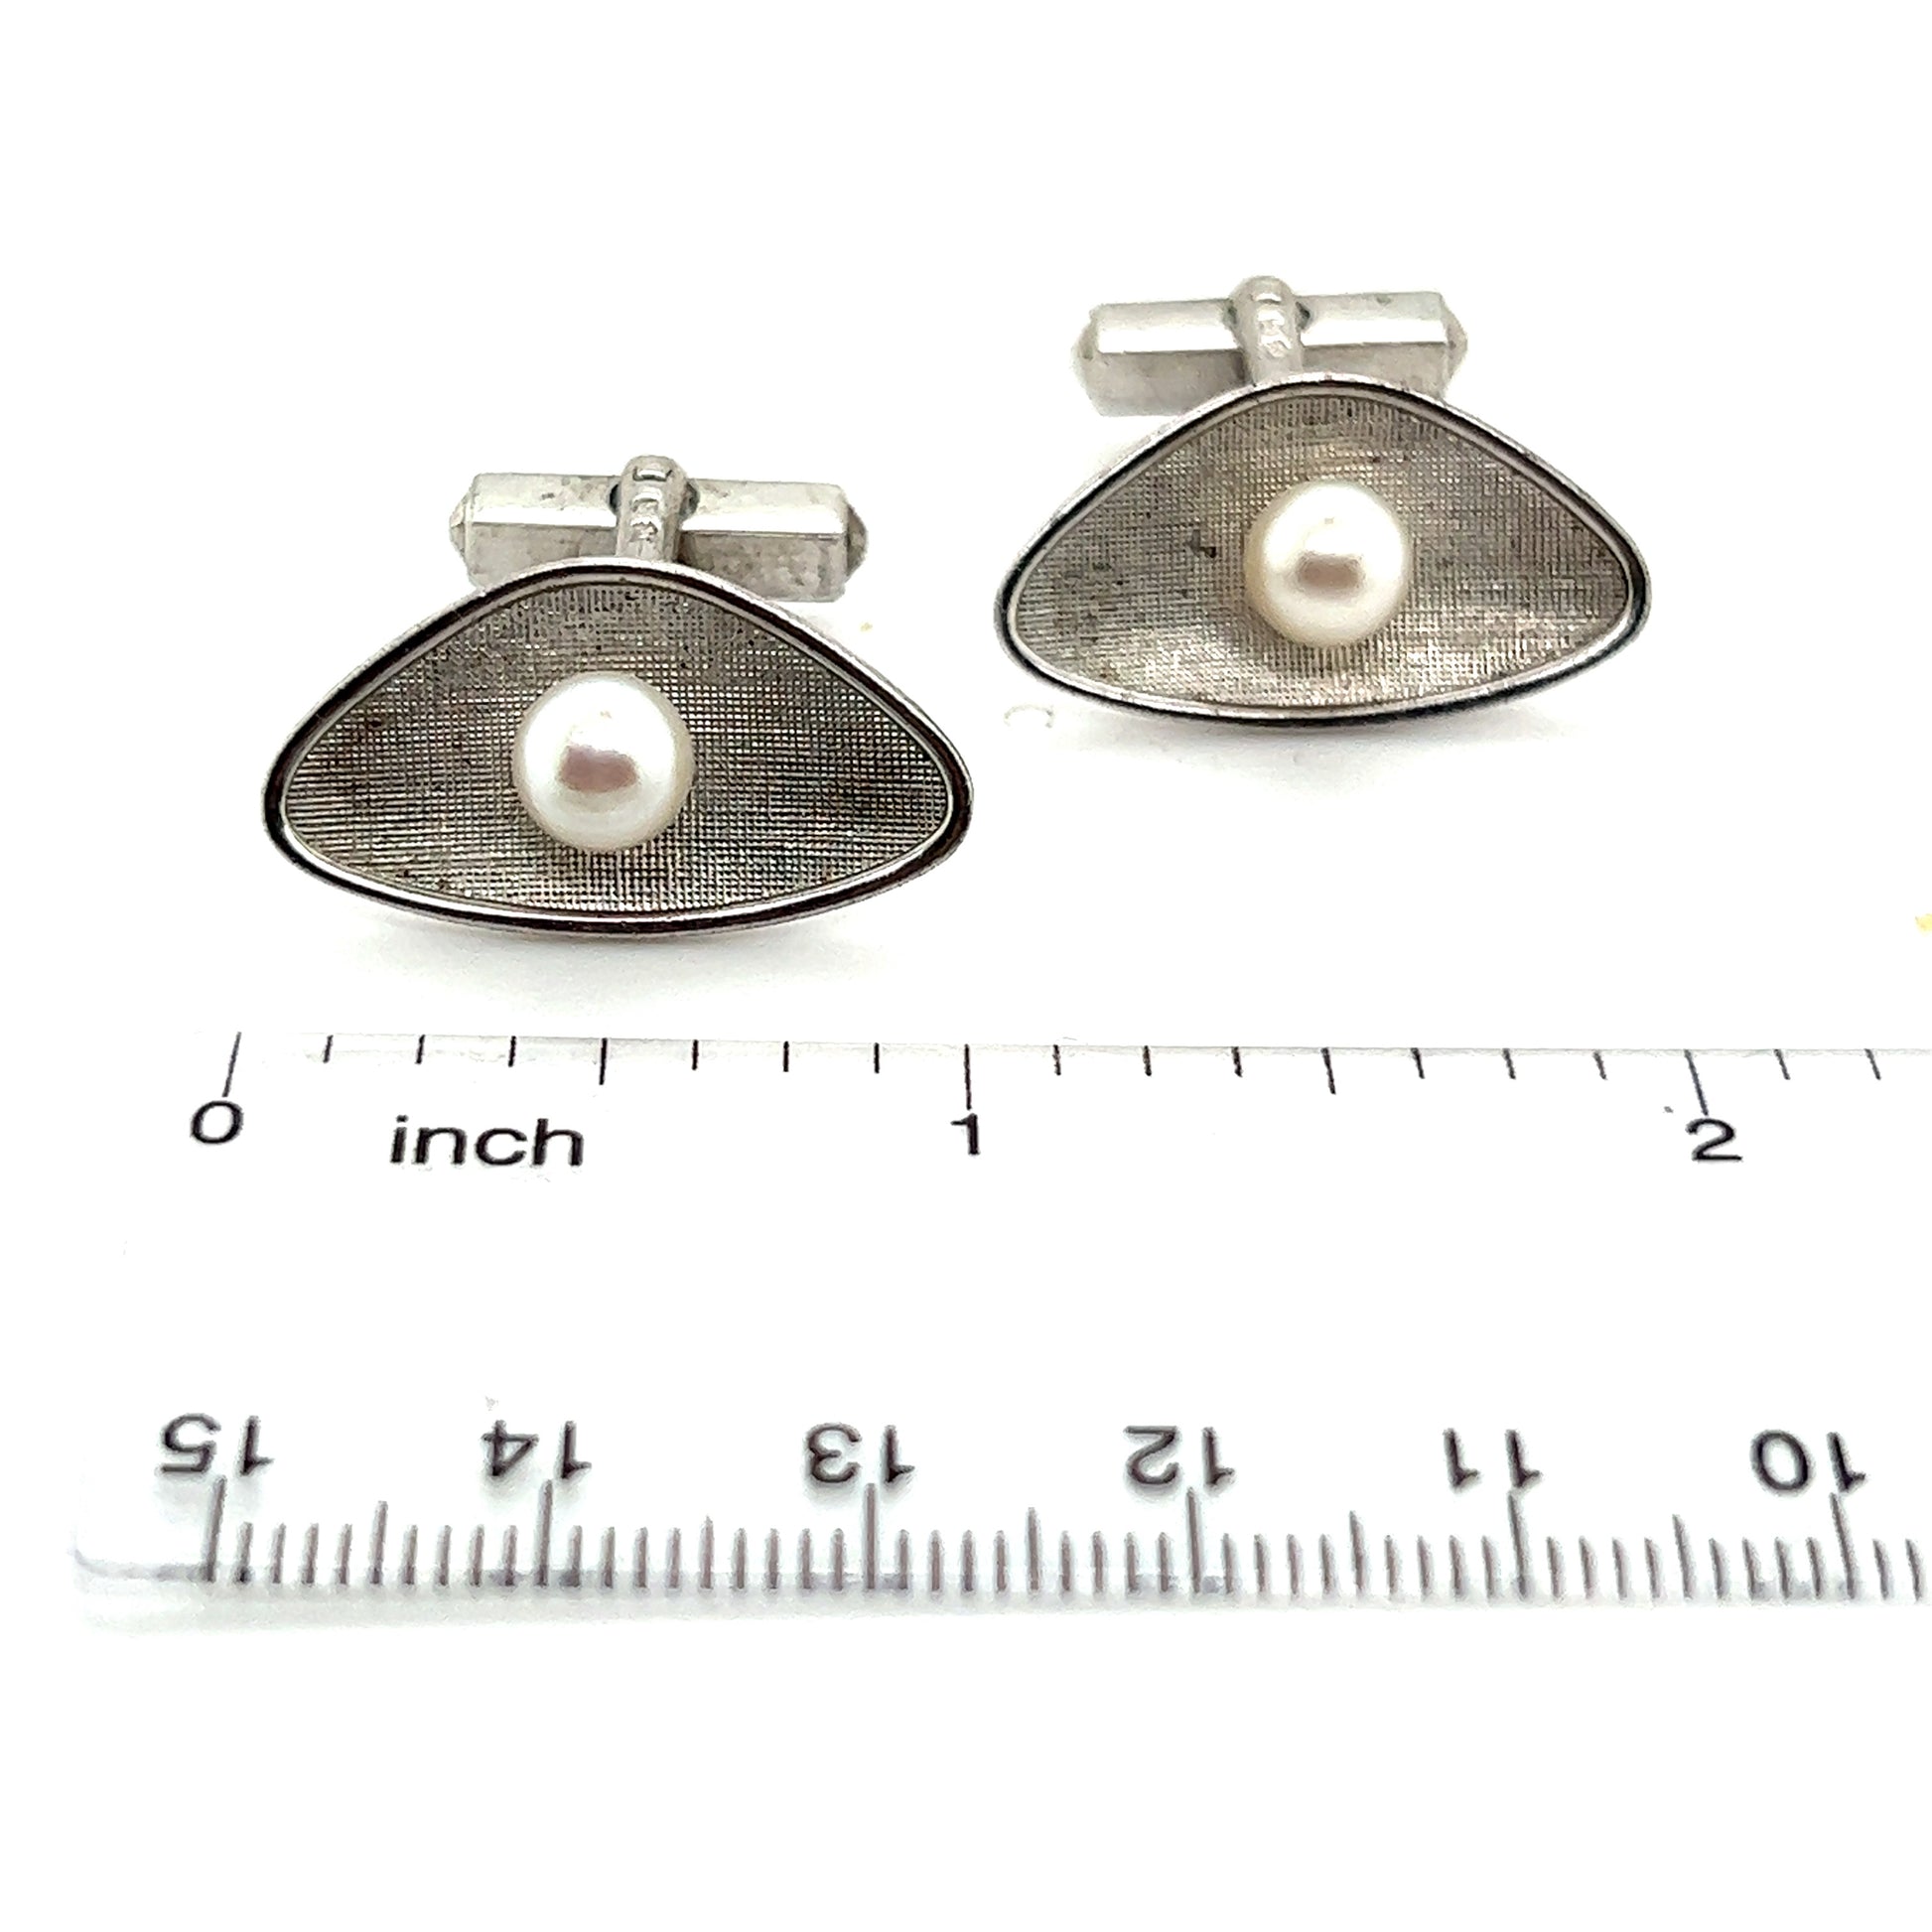 Mikimoto Estate Akoya Pearl Mens Cufflinks 6.5 mm Sterling Silver M311 - Certified Fine Jewelry